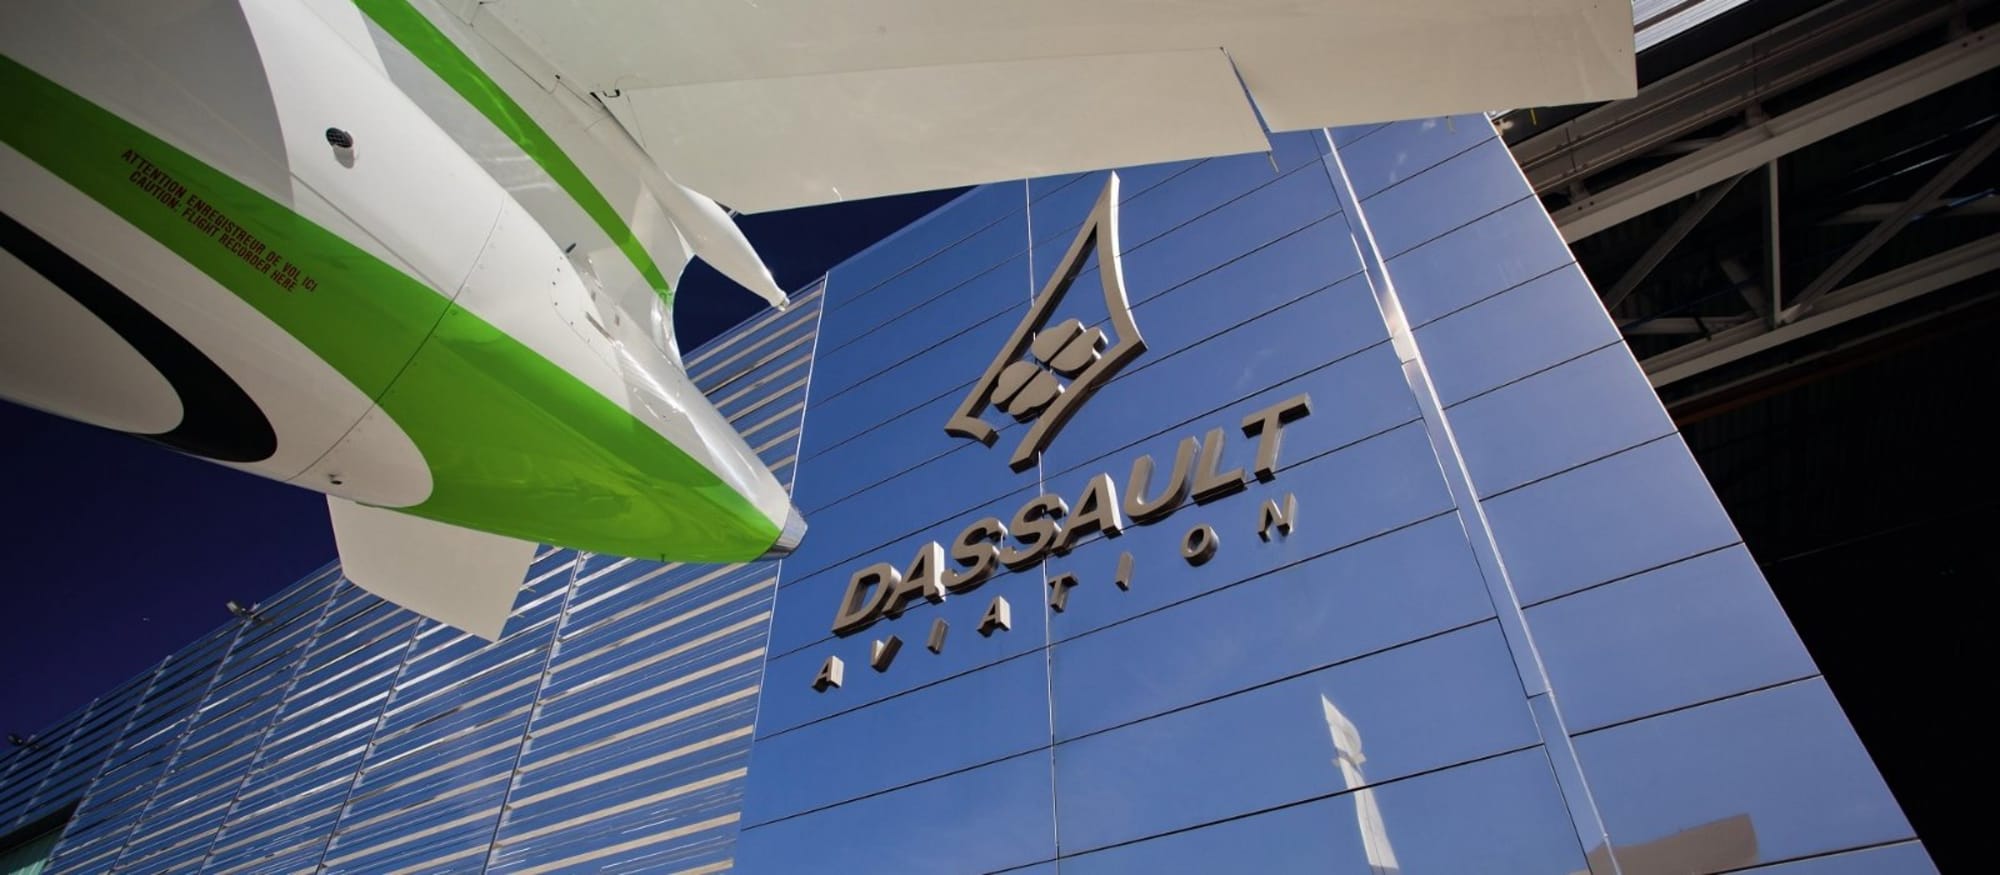 Dassault Aviation facility: Bordeaux-Mérignac, France.